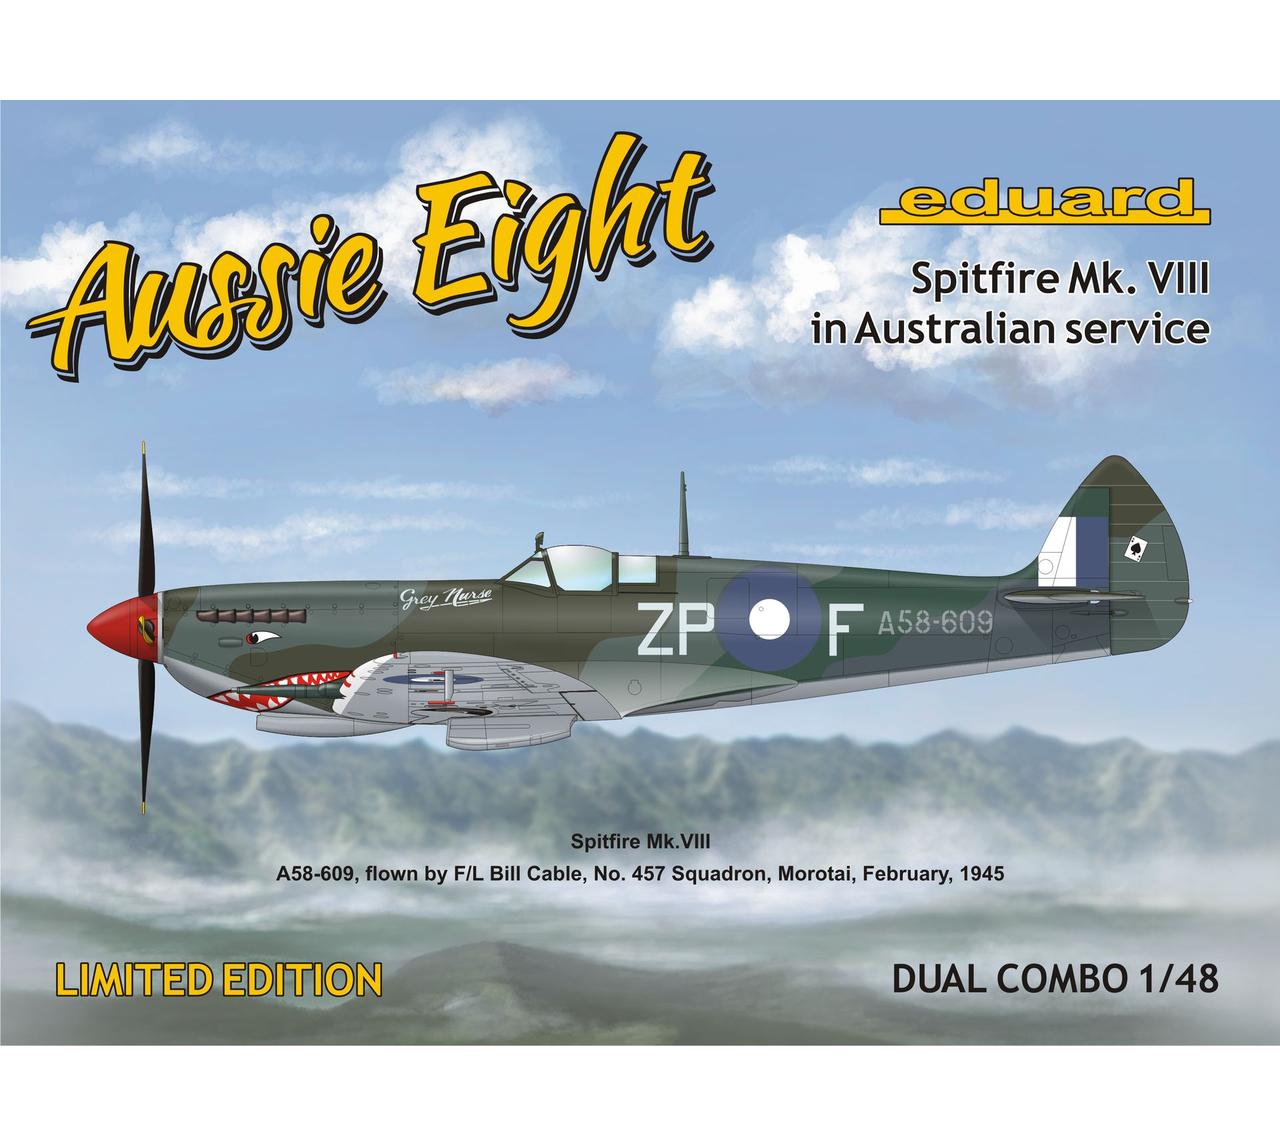 Eduard Spitfire-kavalkad, Aussie Eight #1 klar, Aussie Eight #2 NY!, Bonus: Airfix Spitfire XII - Sida 12 17